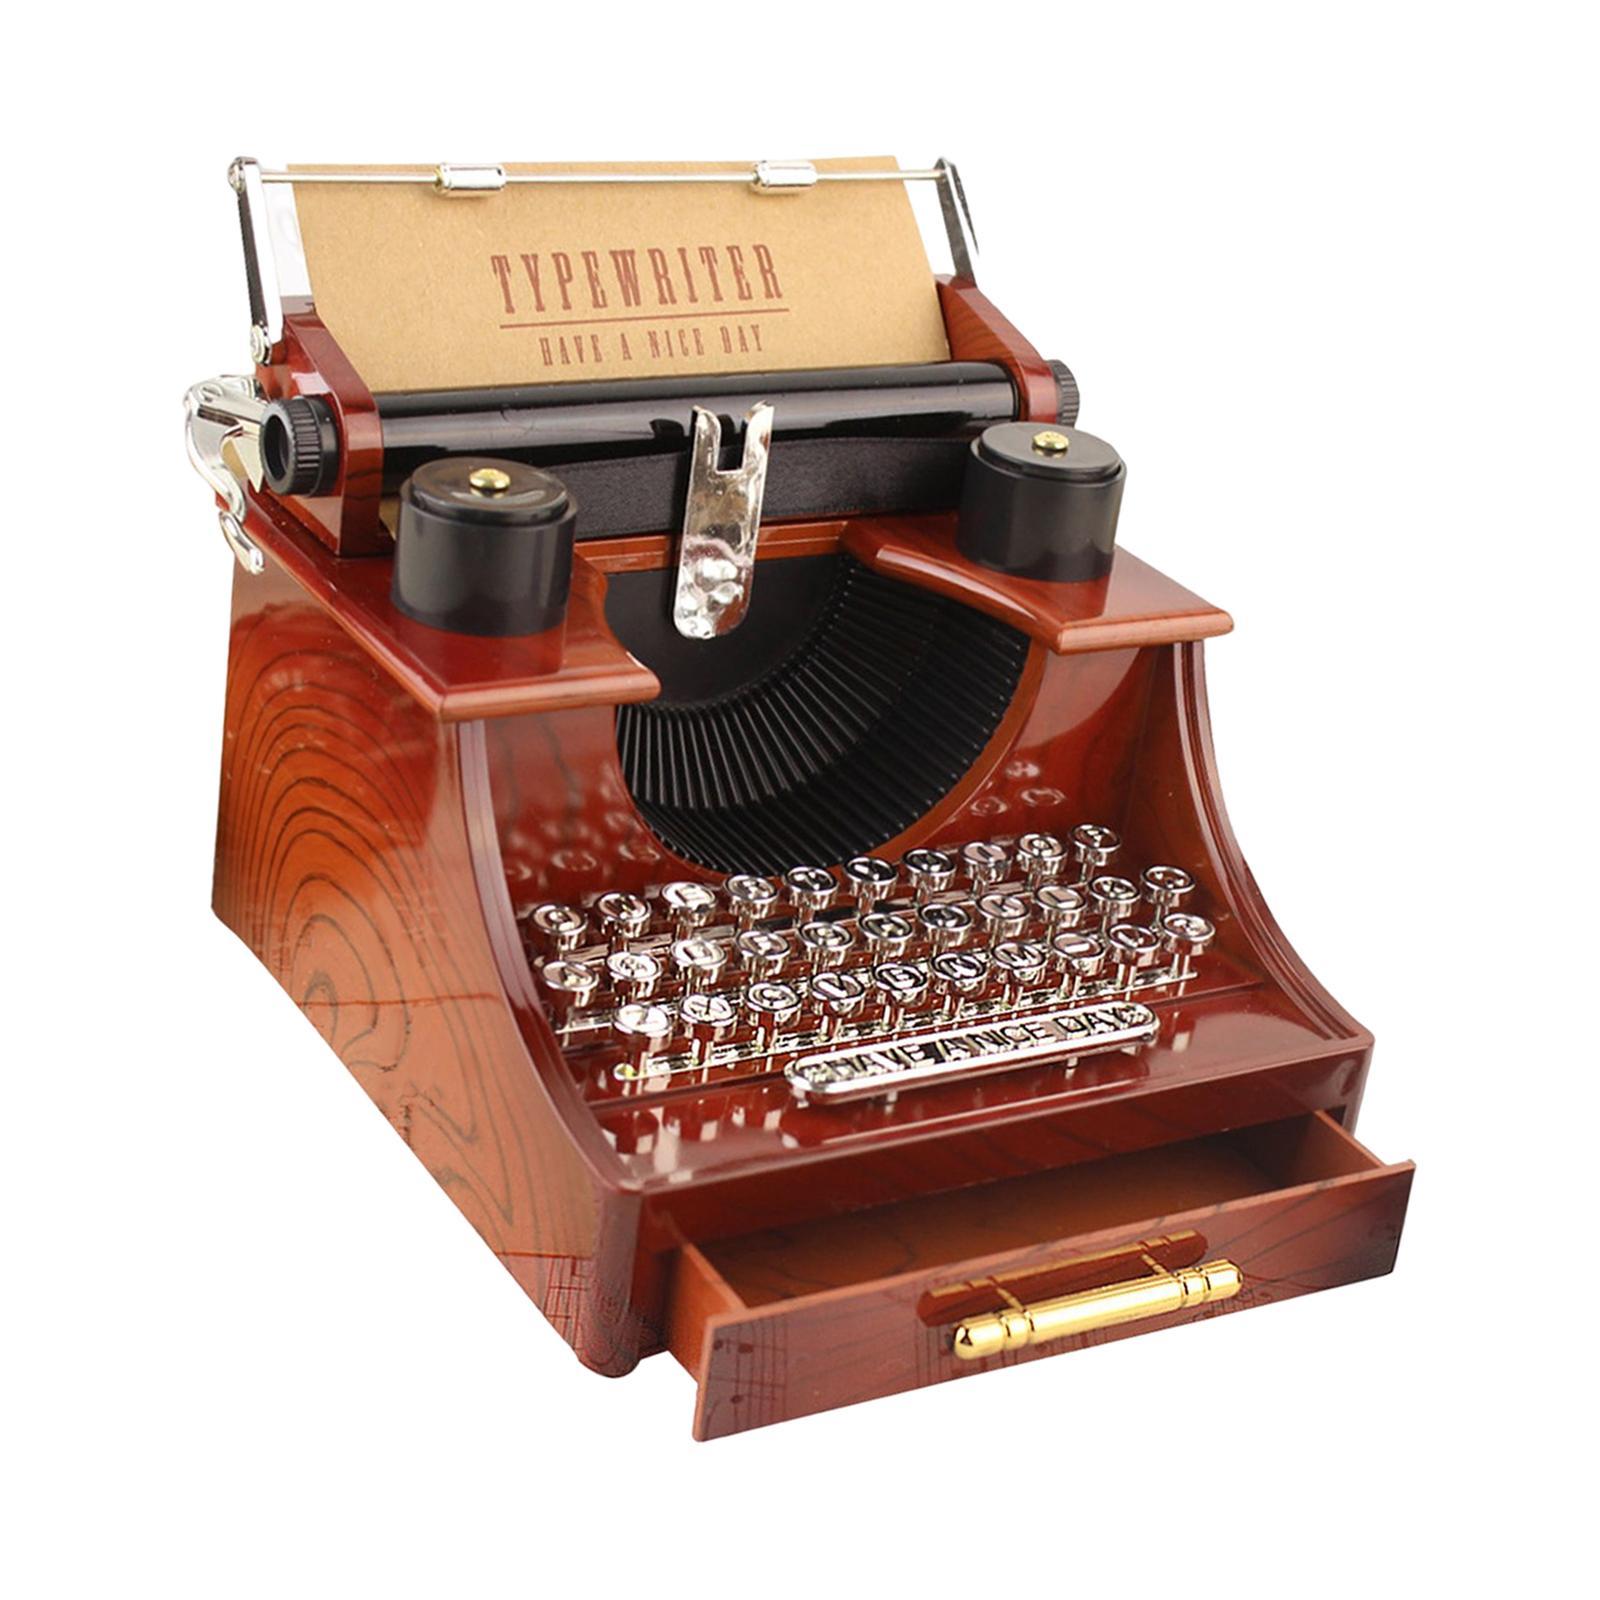 Clockwork Music Box Vintage music box Jewelry Box Vintage Antique Nostalgic Mechanical Desktop Elegant Typewriter Music Box for Party Birthday